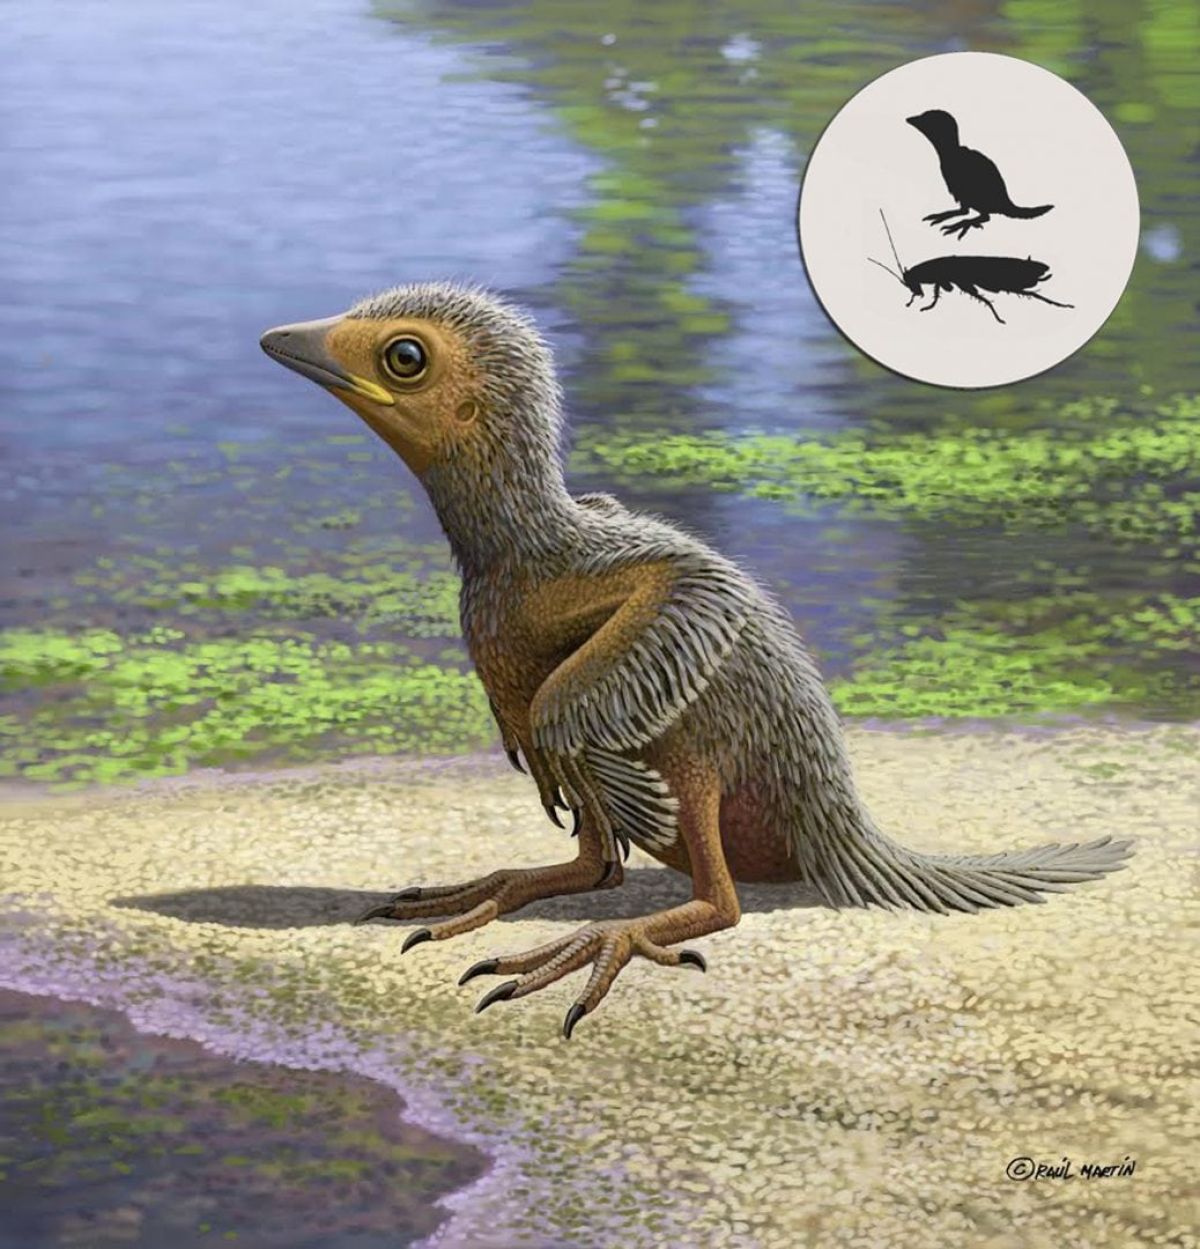 Evolutionary understanding takes flight thanks to baby bird fossil